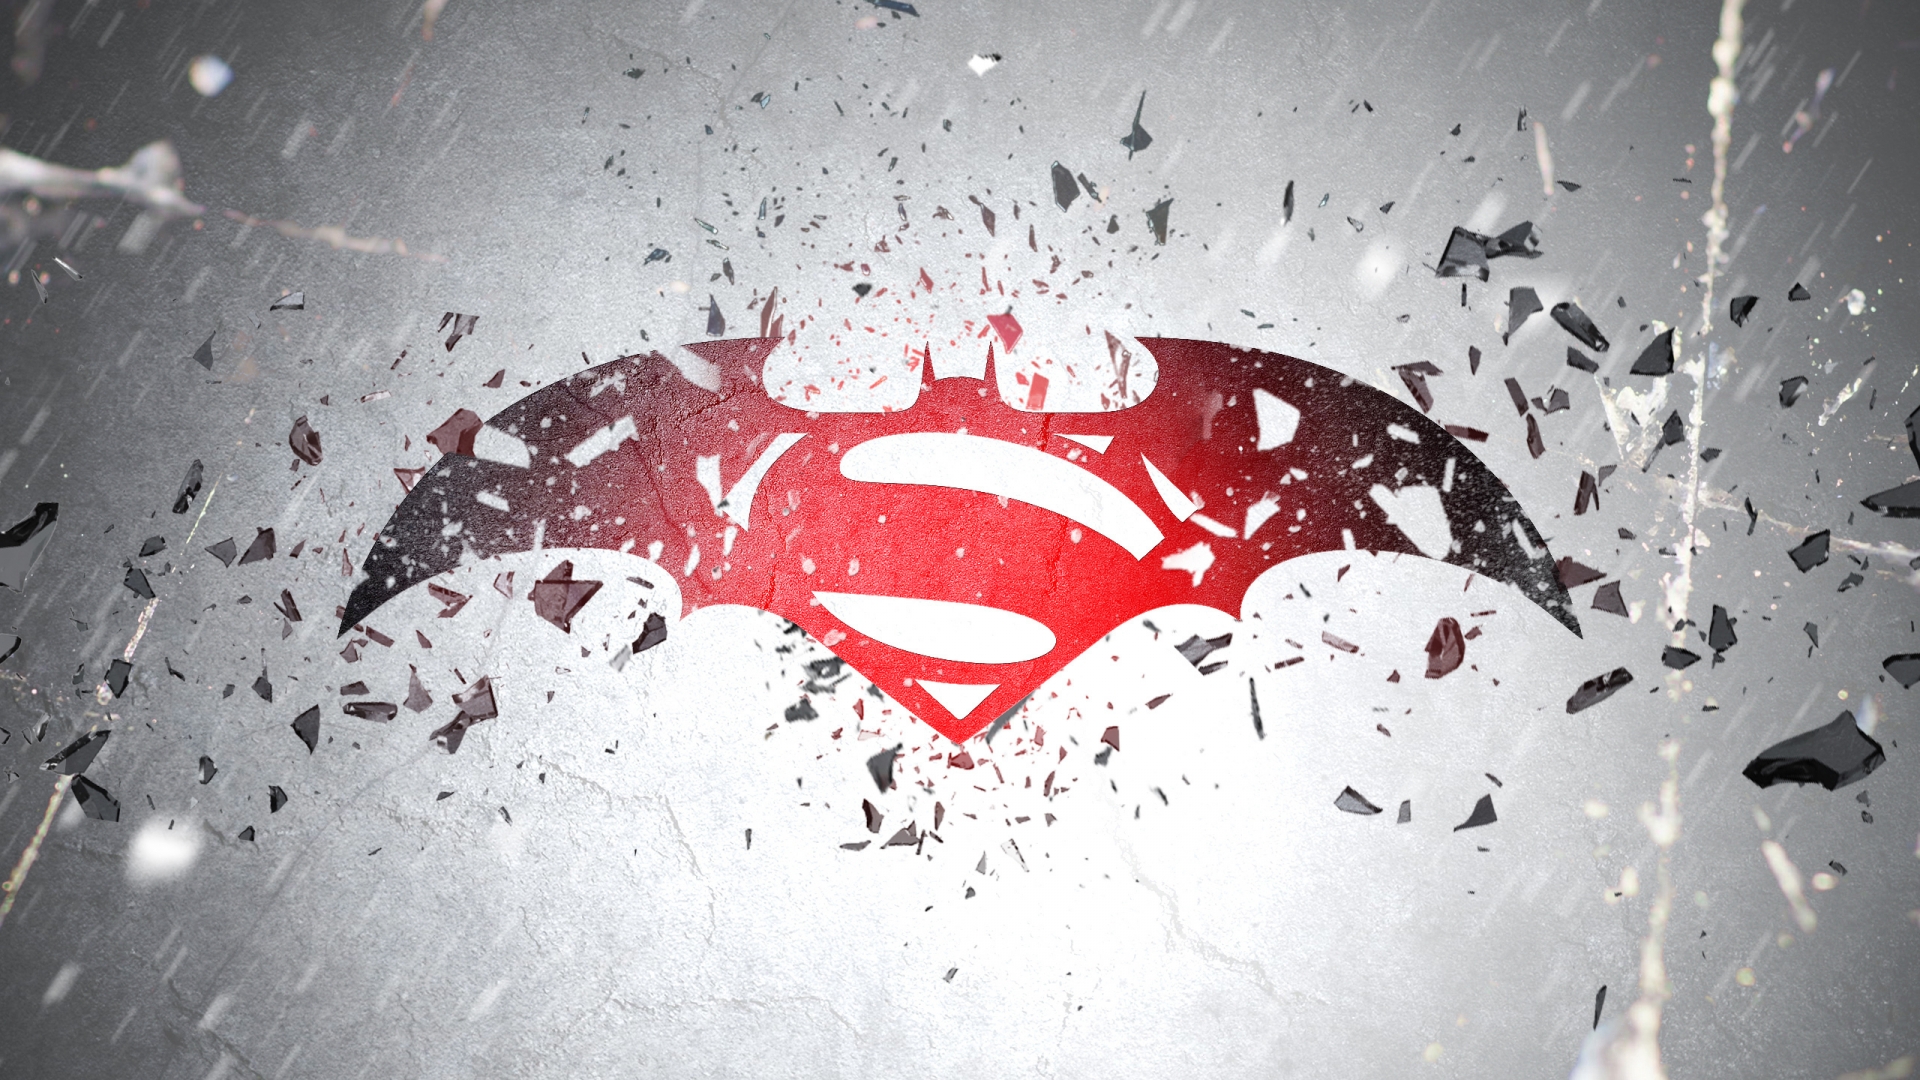 Batman vs Superman Awesome Logo for 1920 x 1080 HDTV 1080p resolution